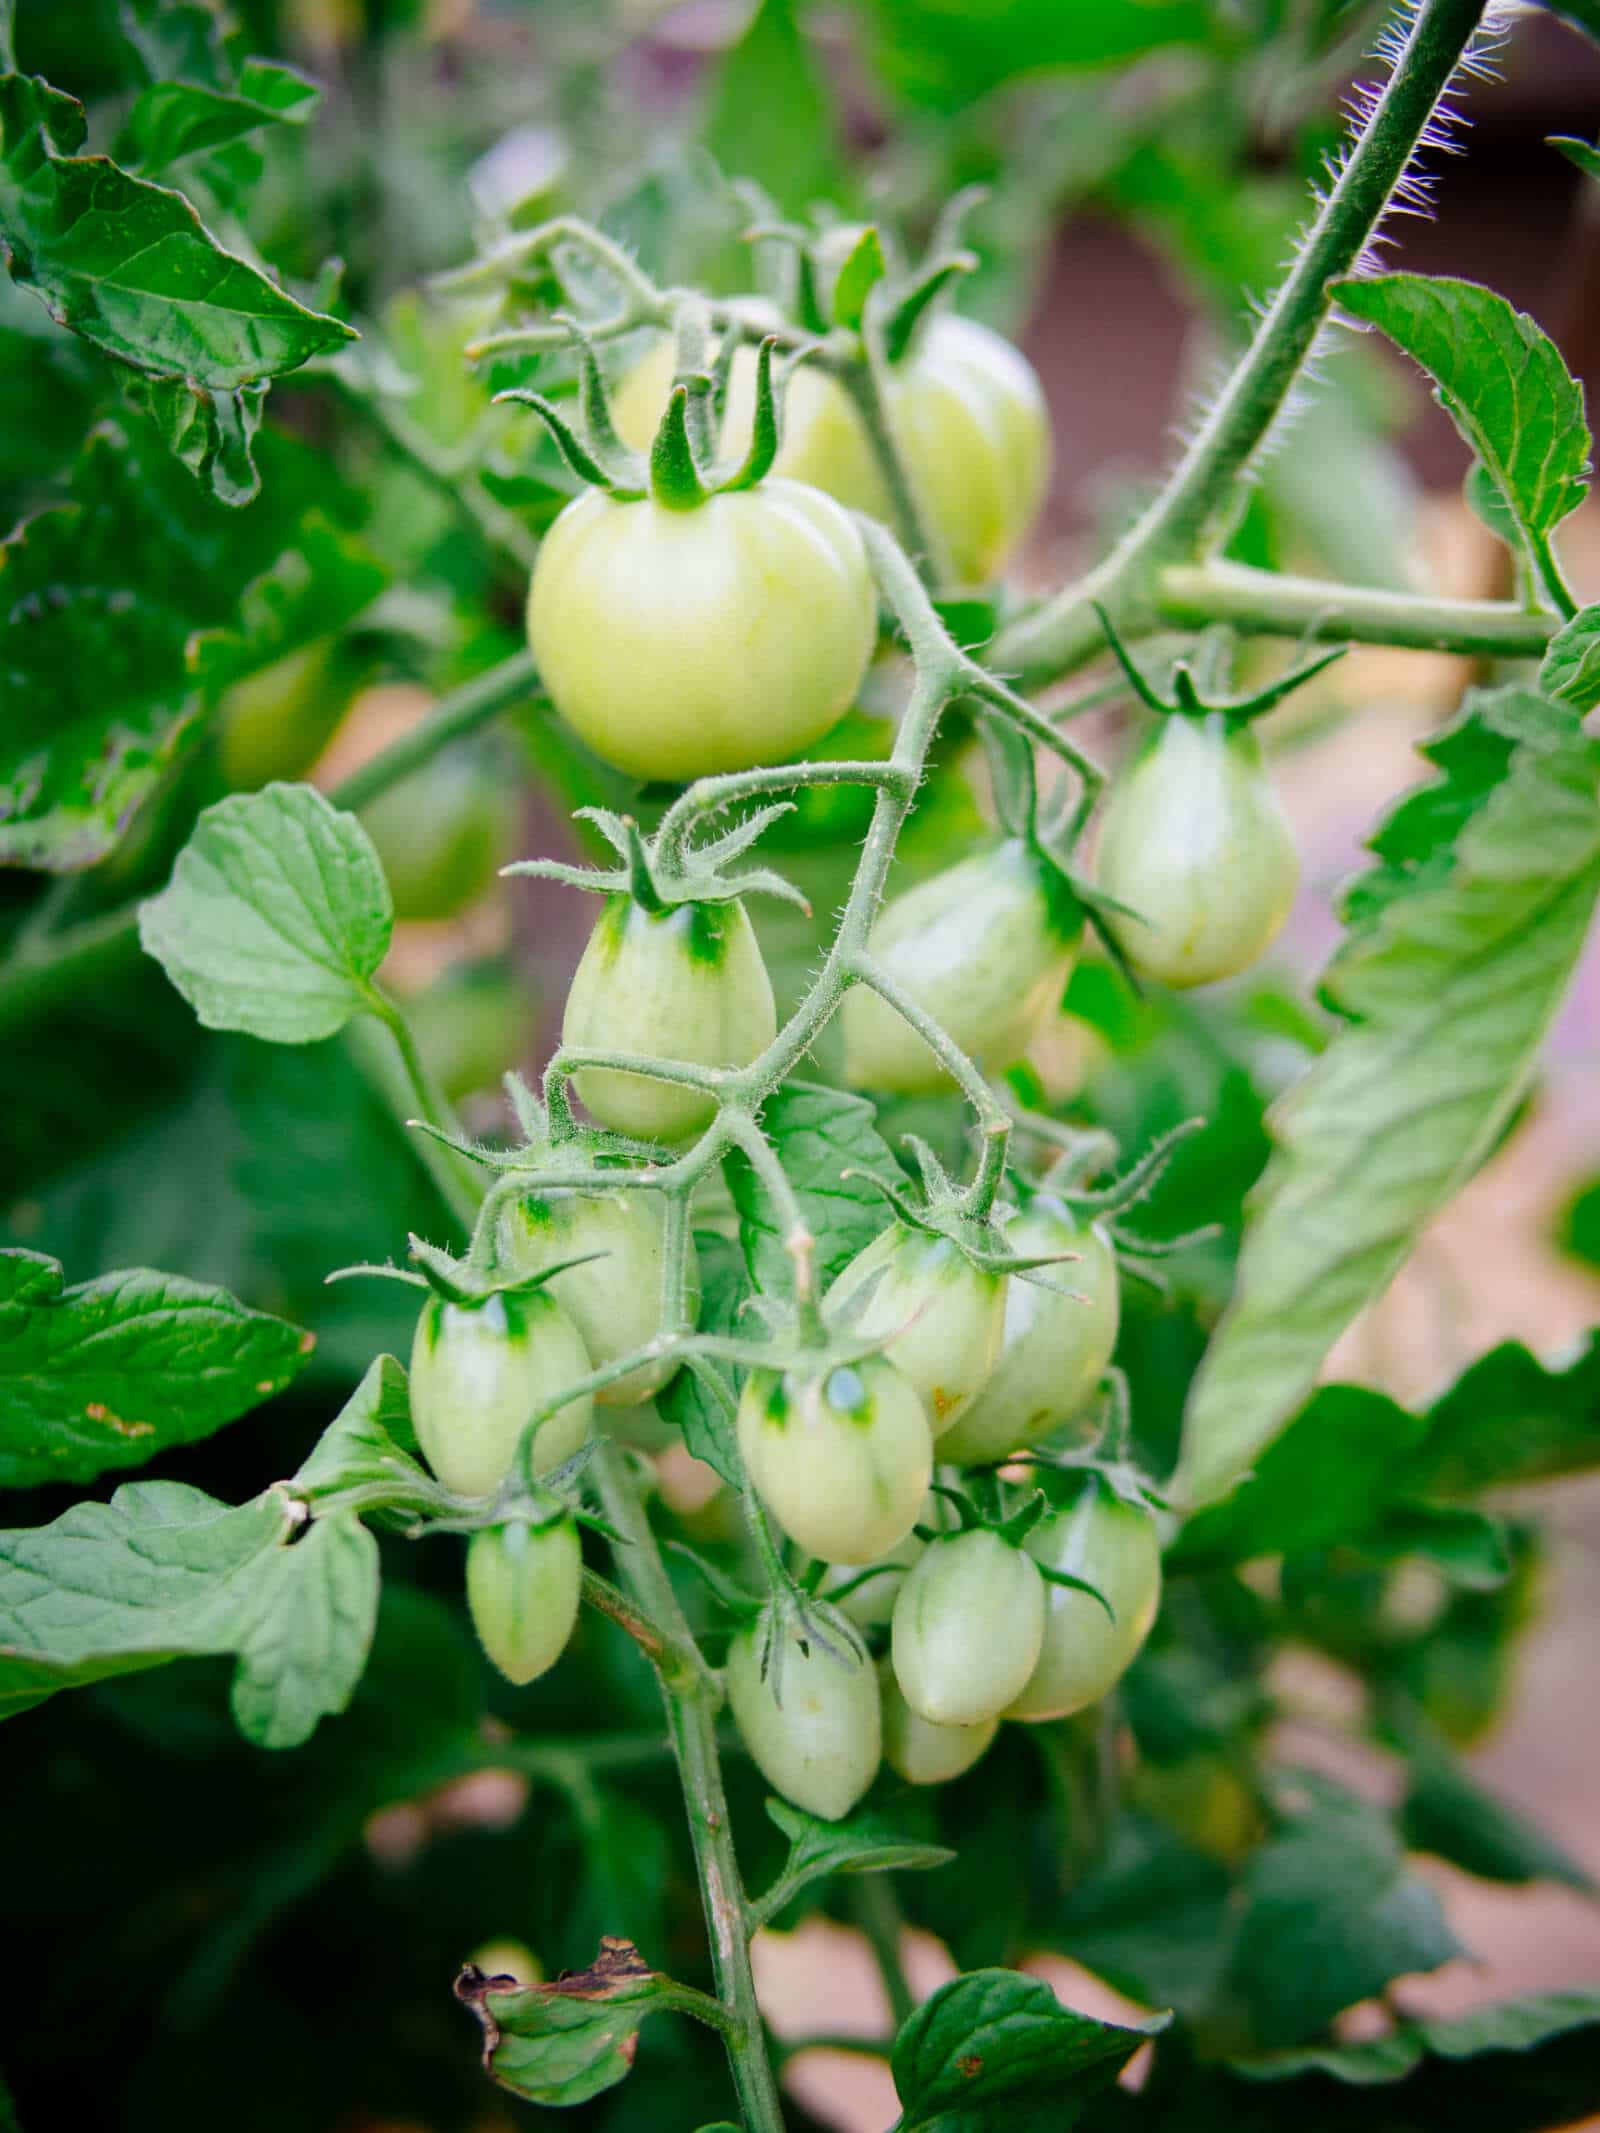 Determinate tomato plant